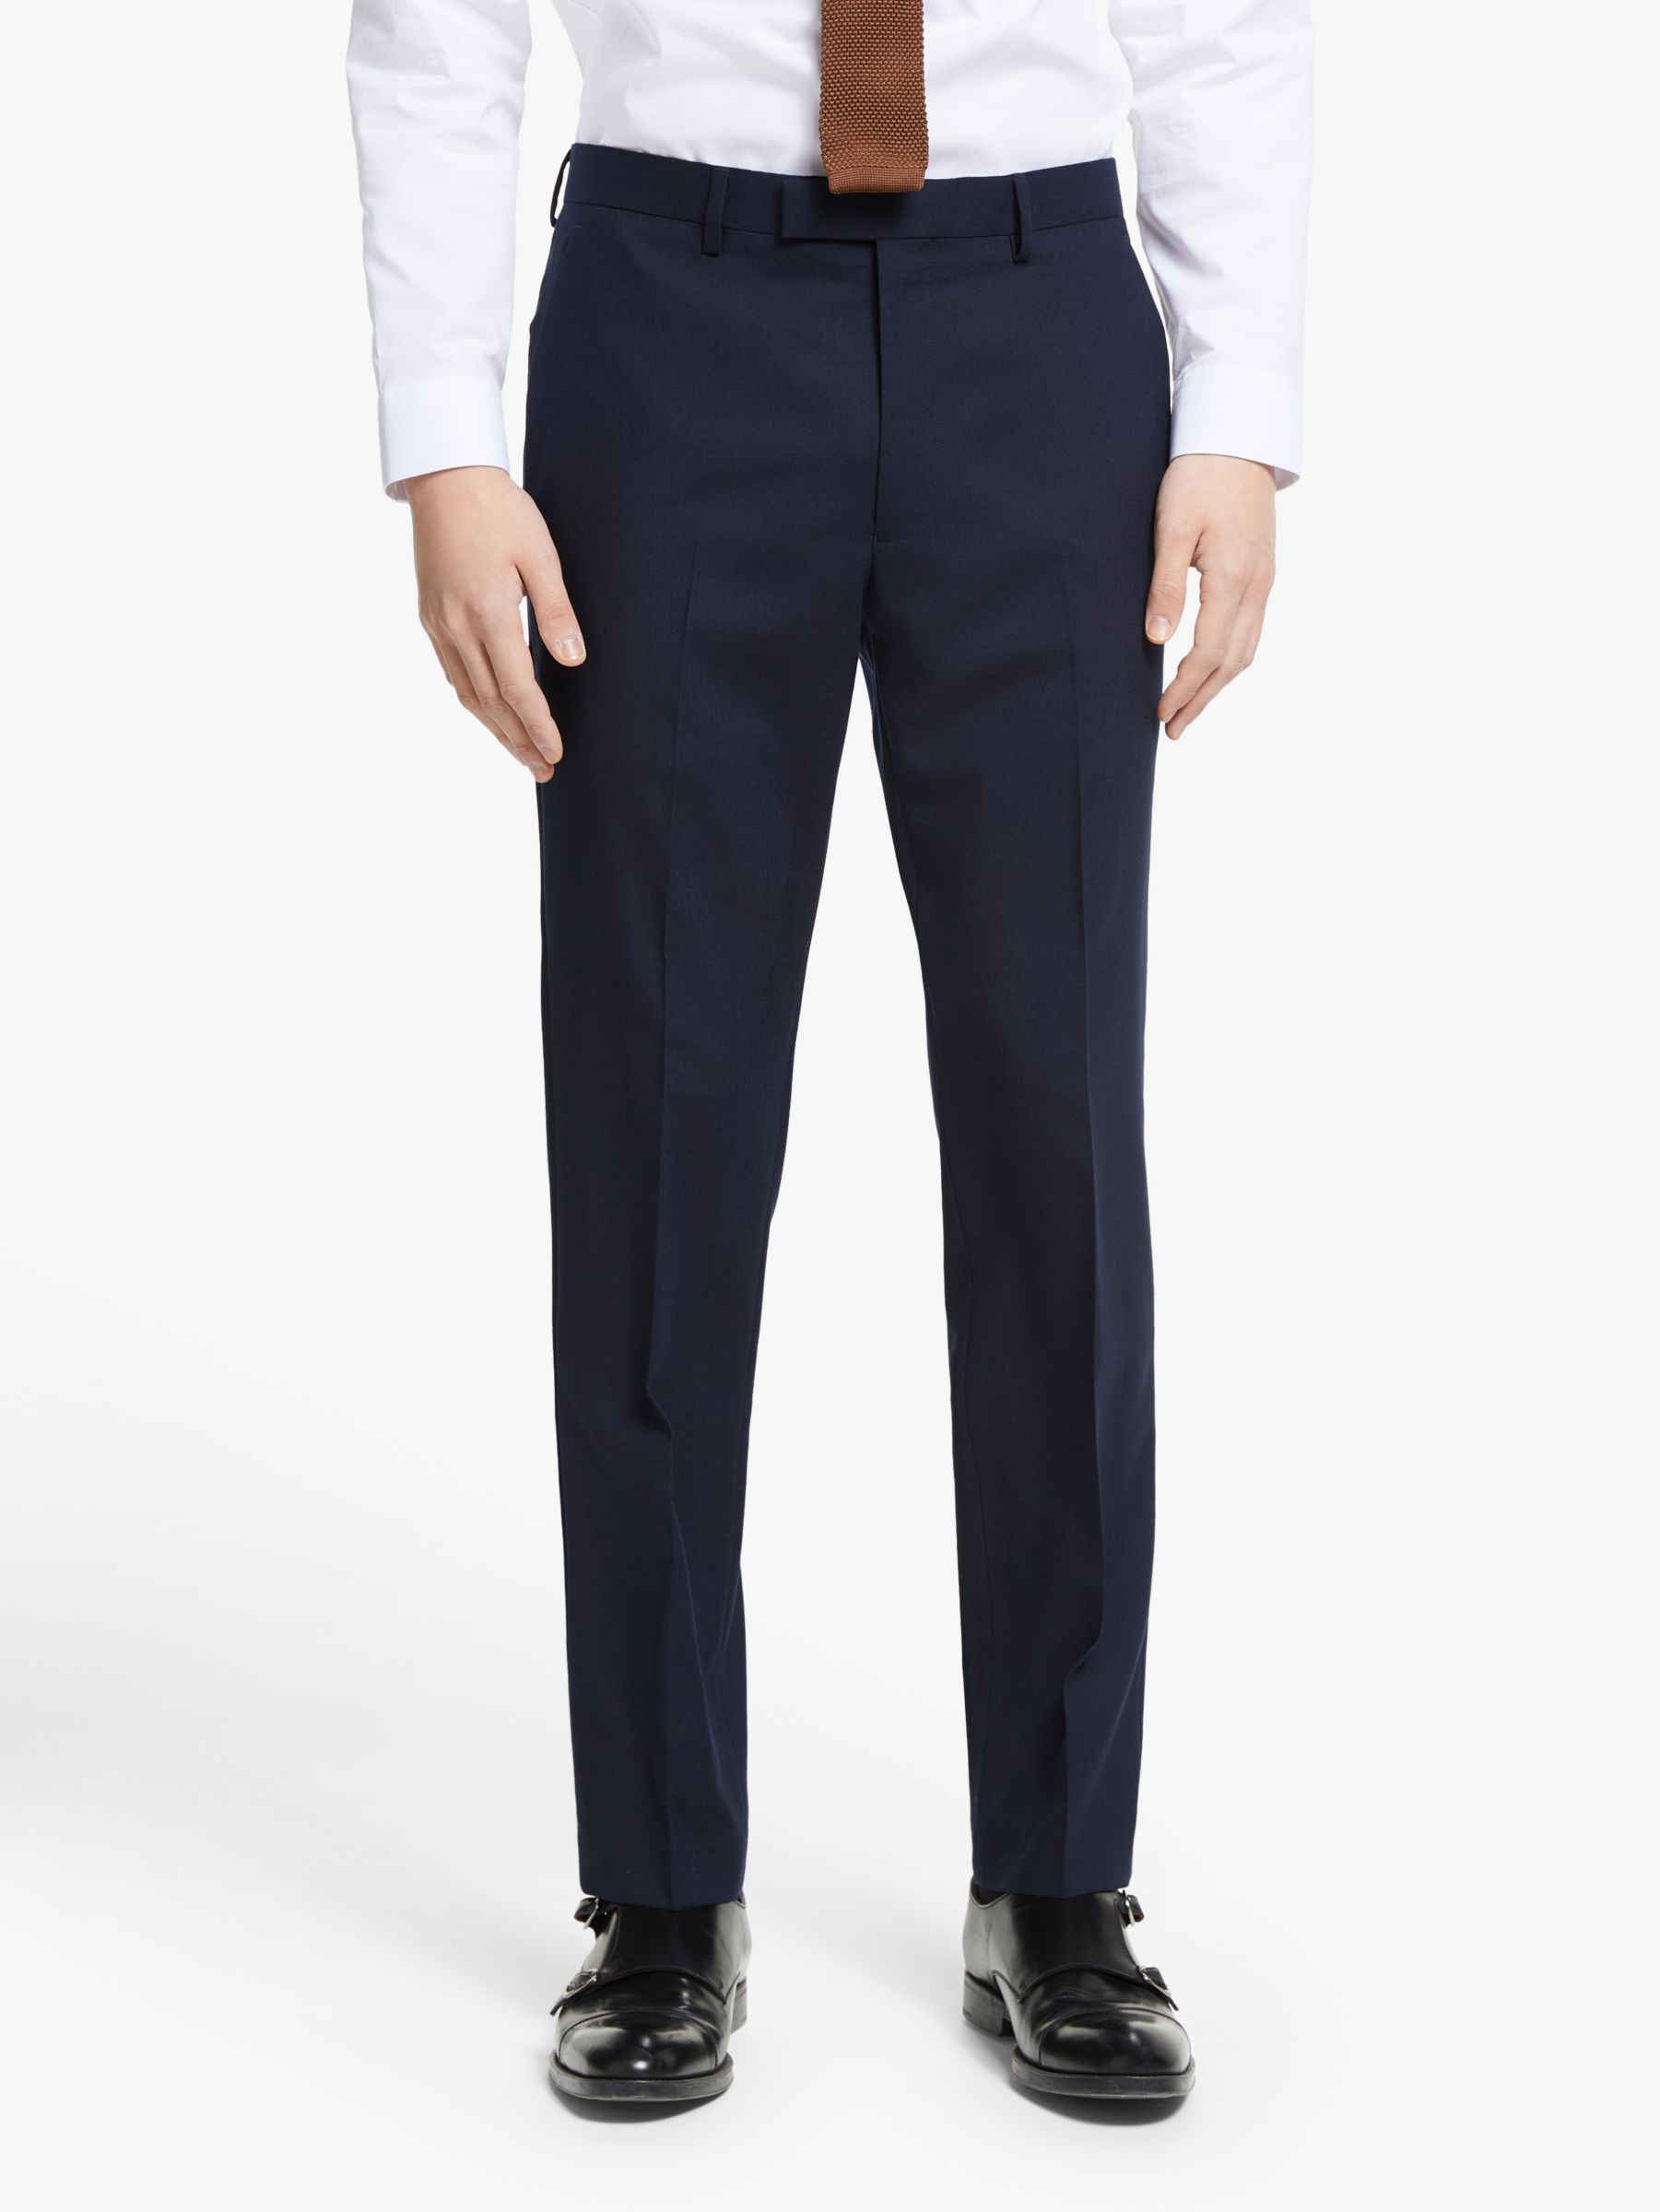 Kin Bengaline Wool Slim Fit Suit Trousers, Navy at John Lewis & Partners